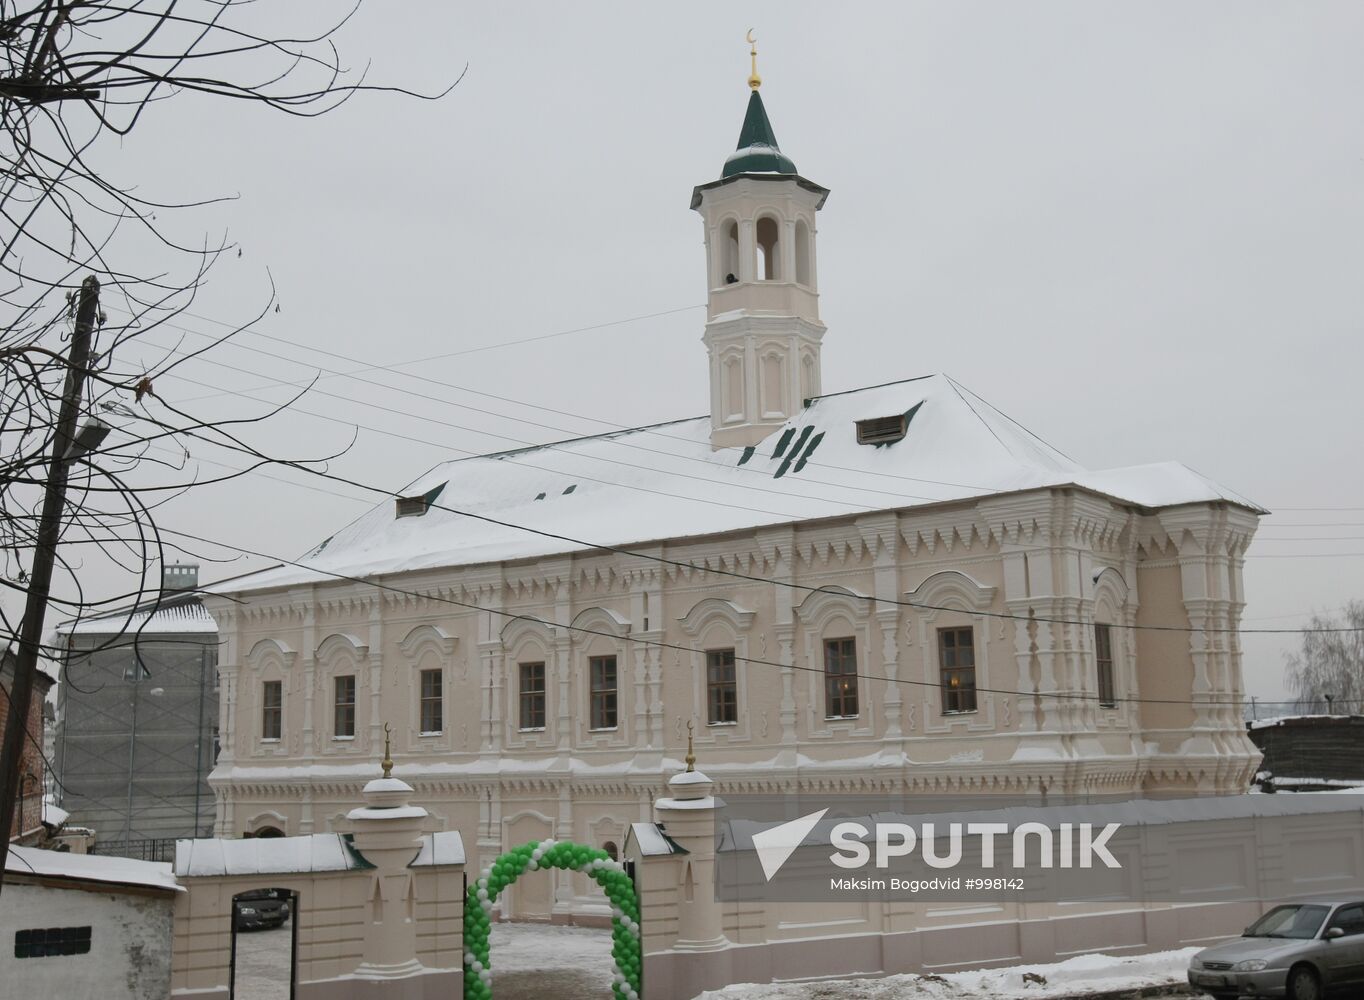 Apanai Mosque opens after renovation